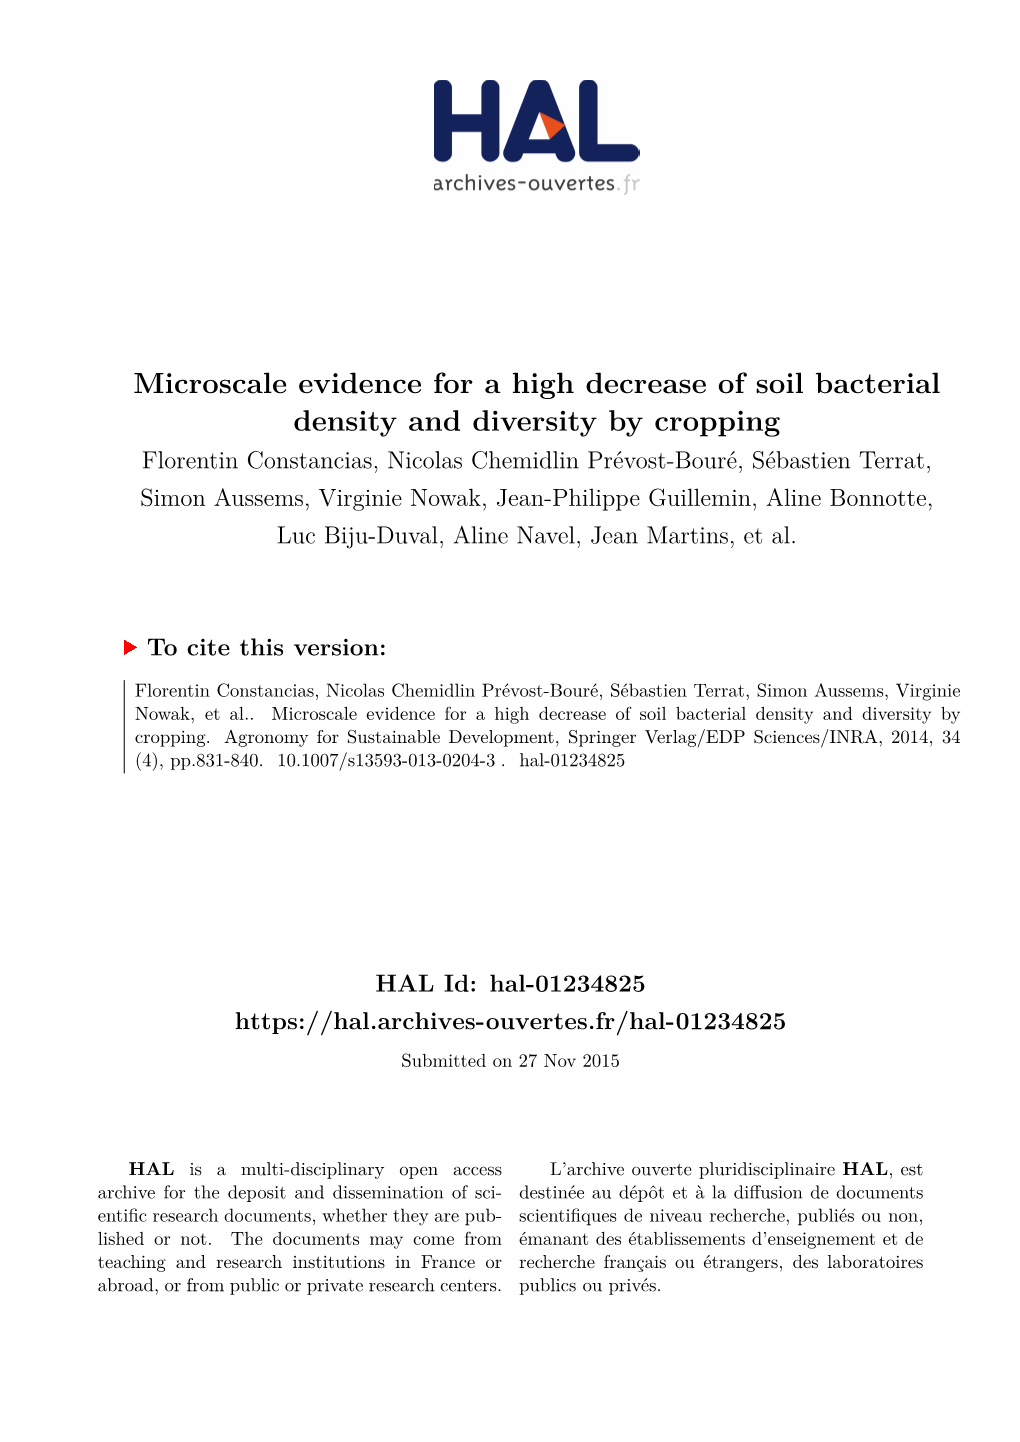 Microscale Evidence for a High Decrease of Soil Bacterial Density